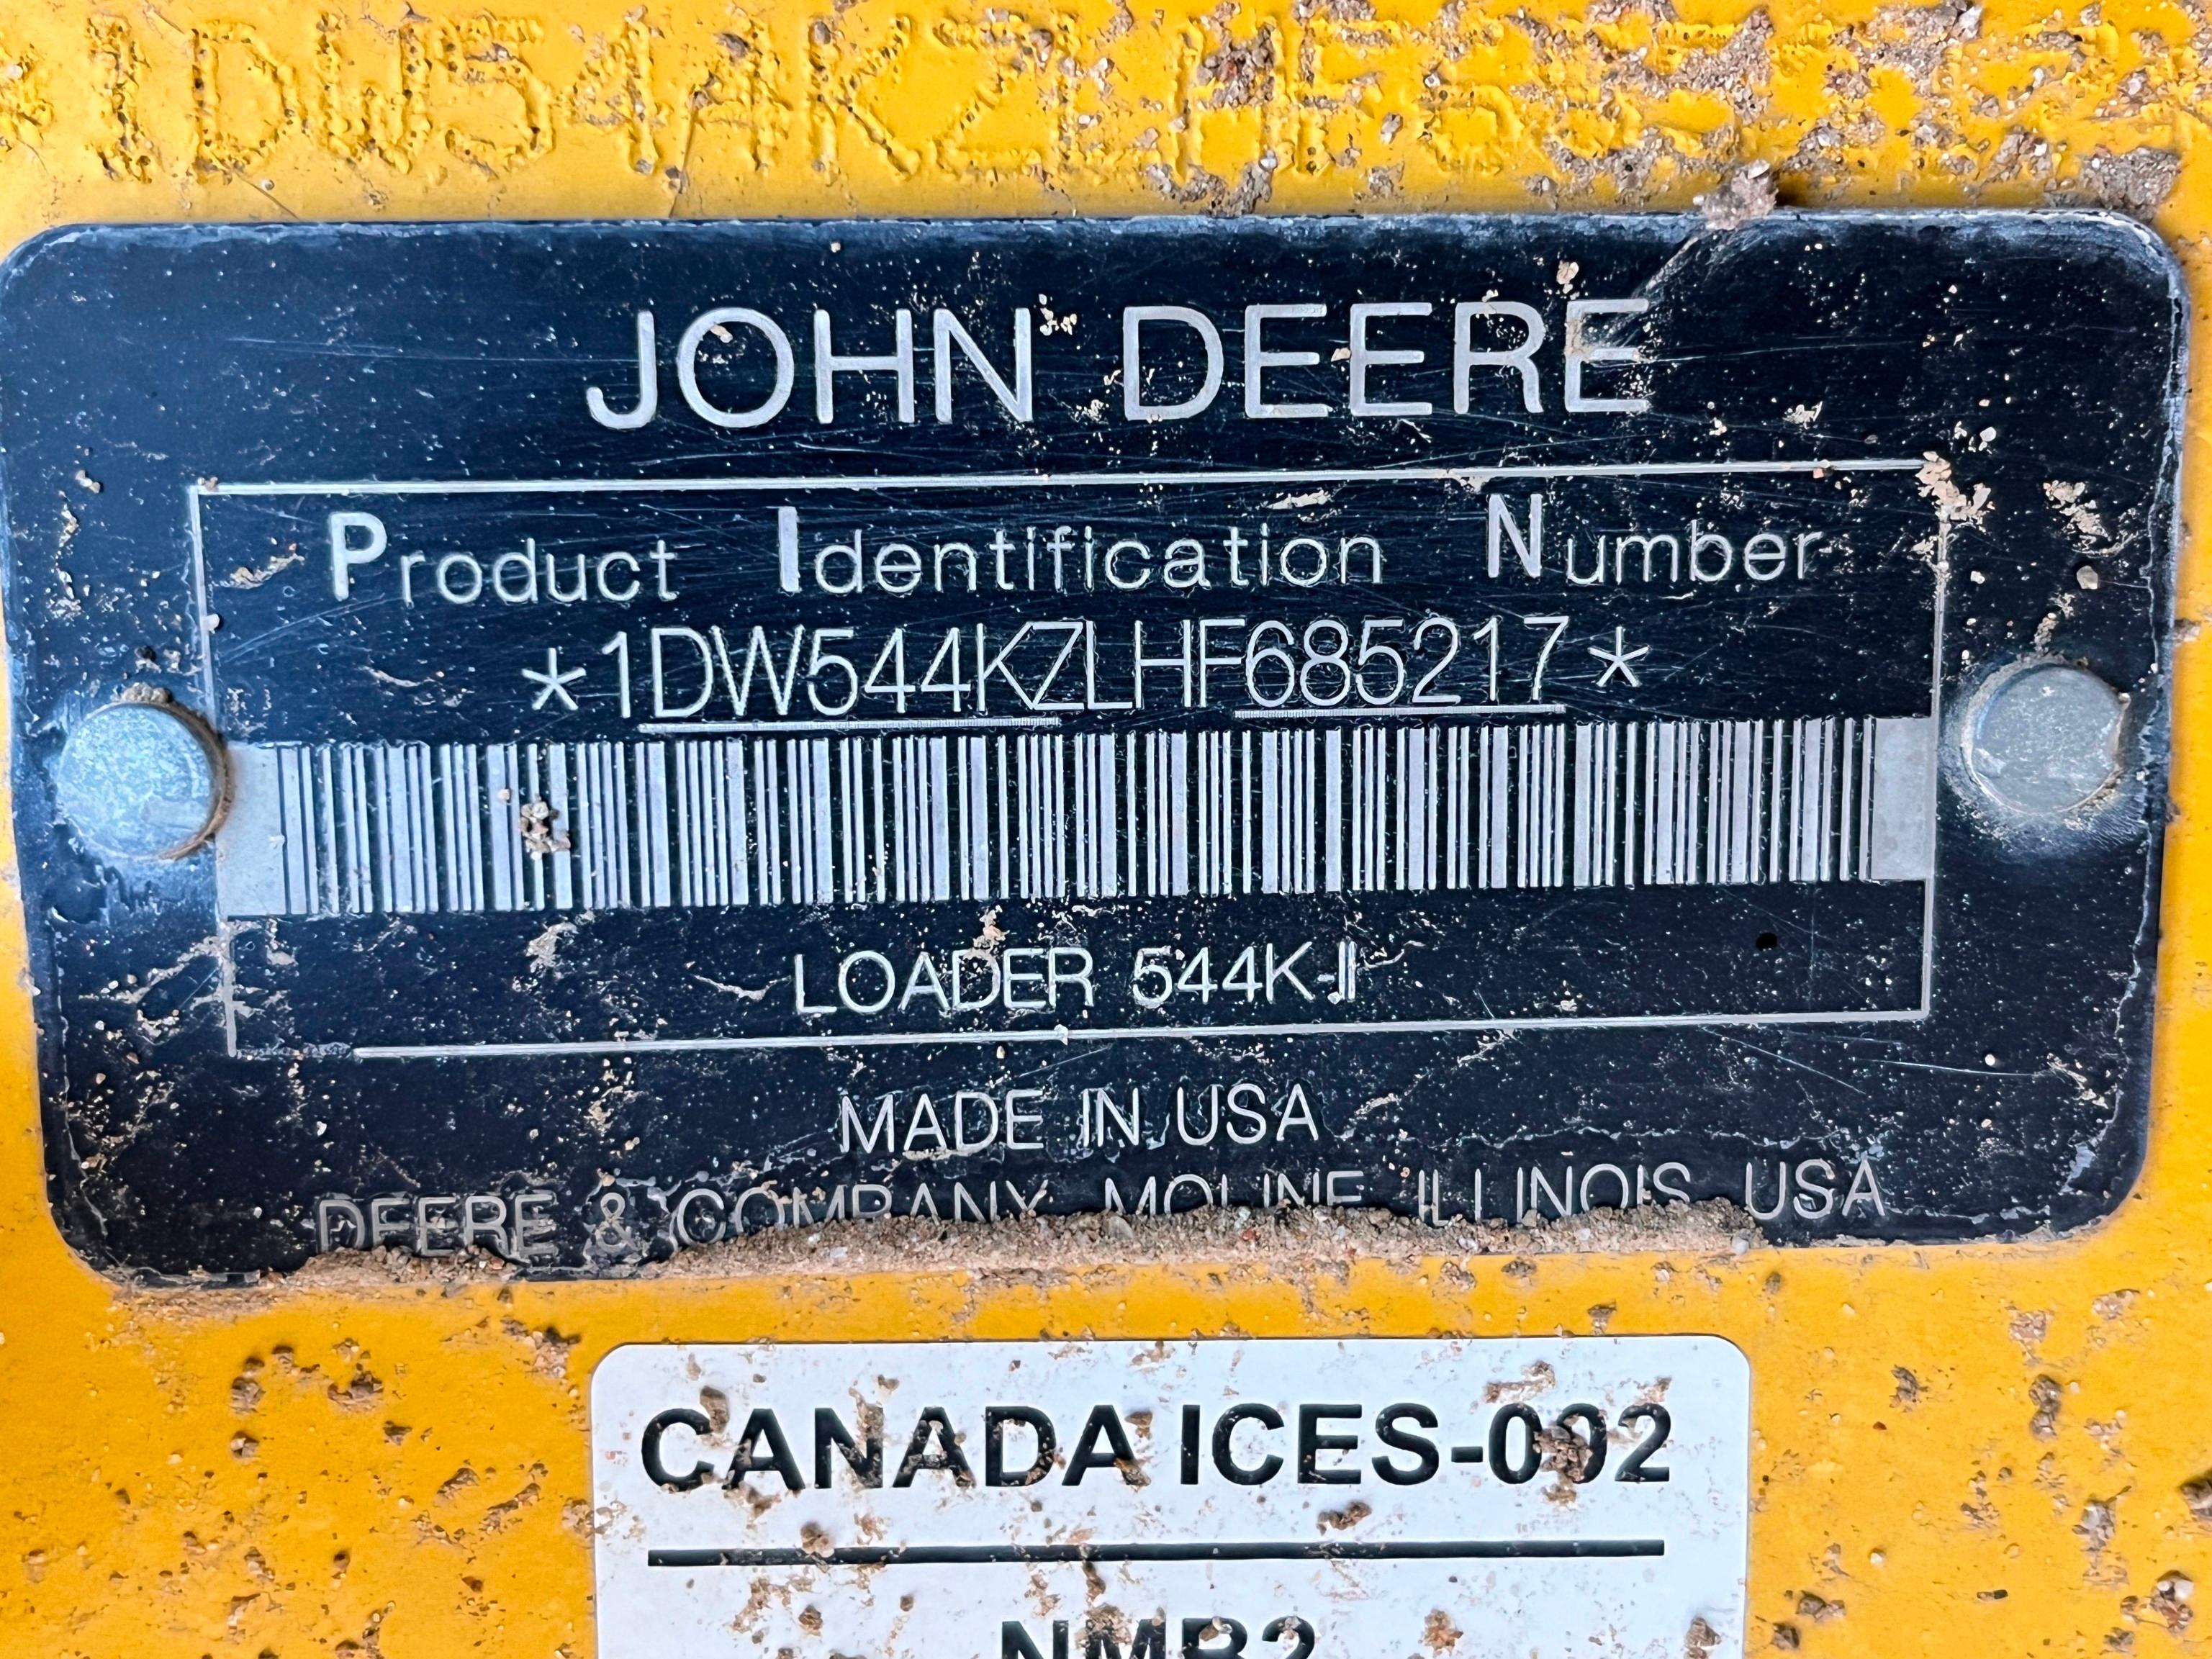 JOHN DEERE 544K SERIES II RUBBER TIRED LOADER SN:1DW544KZLHF685217 powered by John Deere diesel